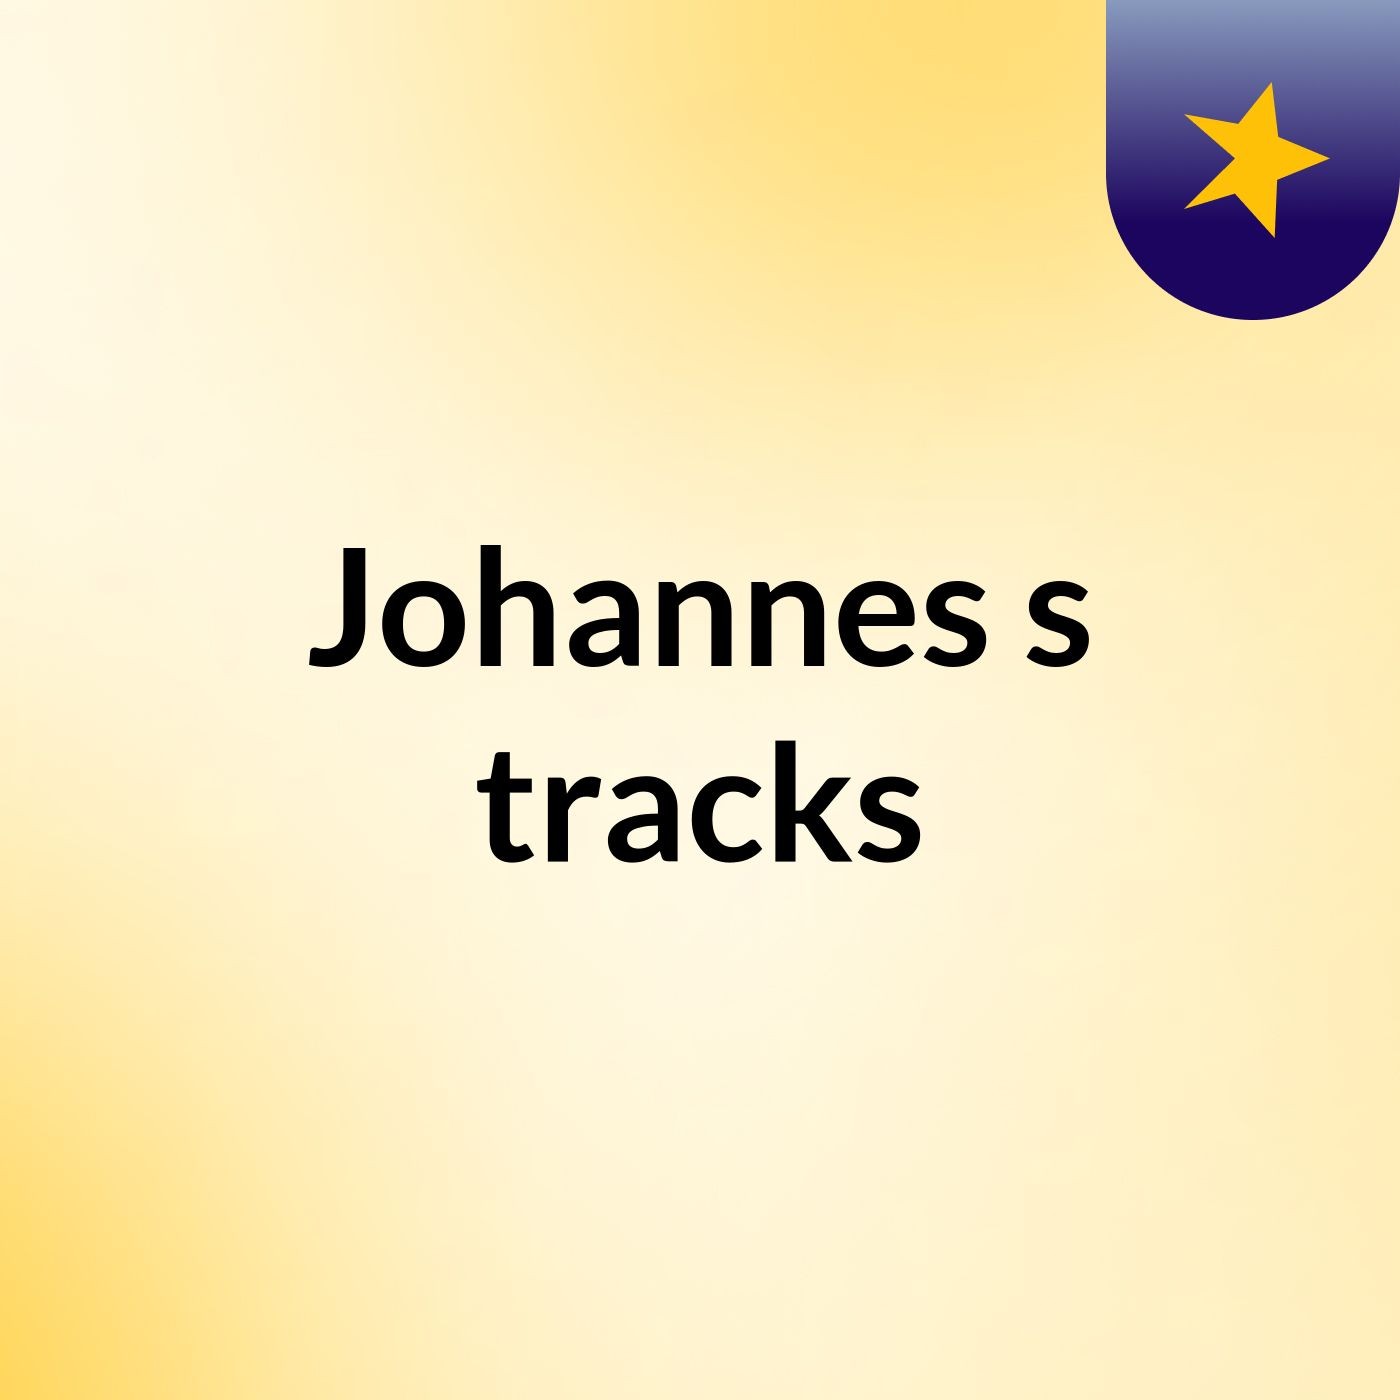 Johannes's tracks